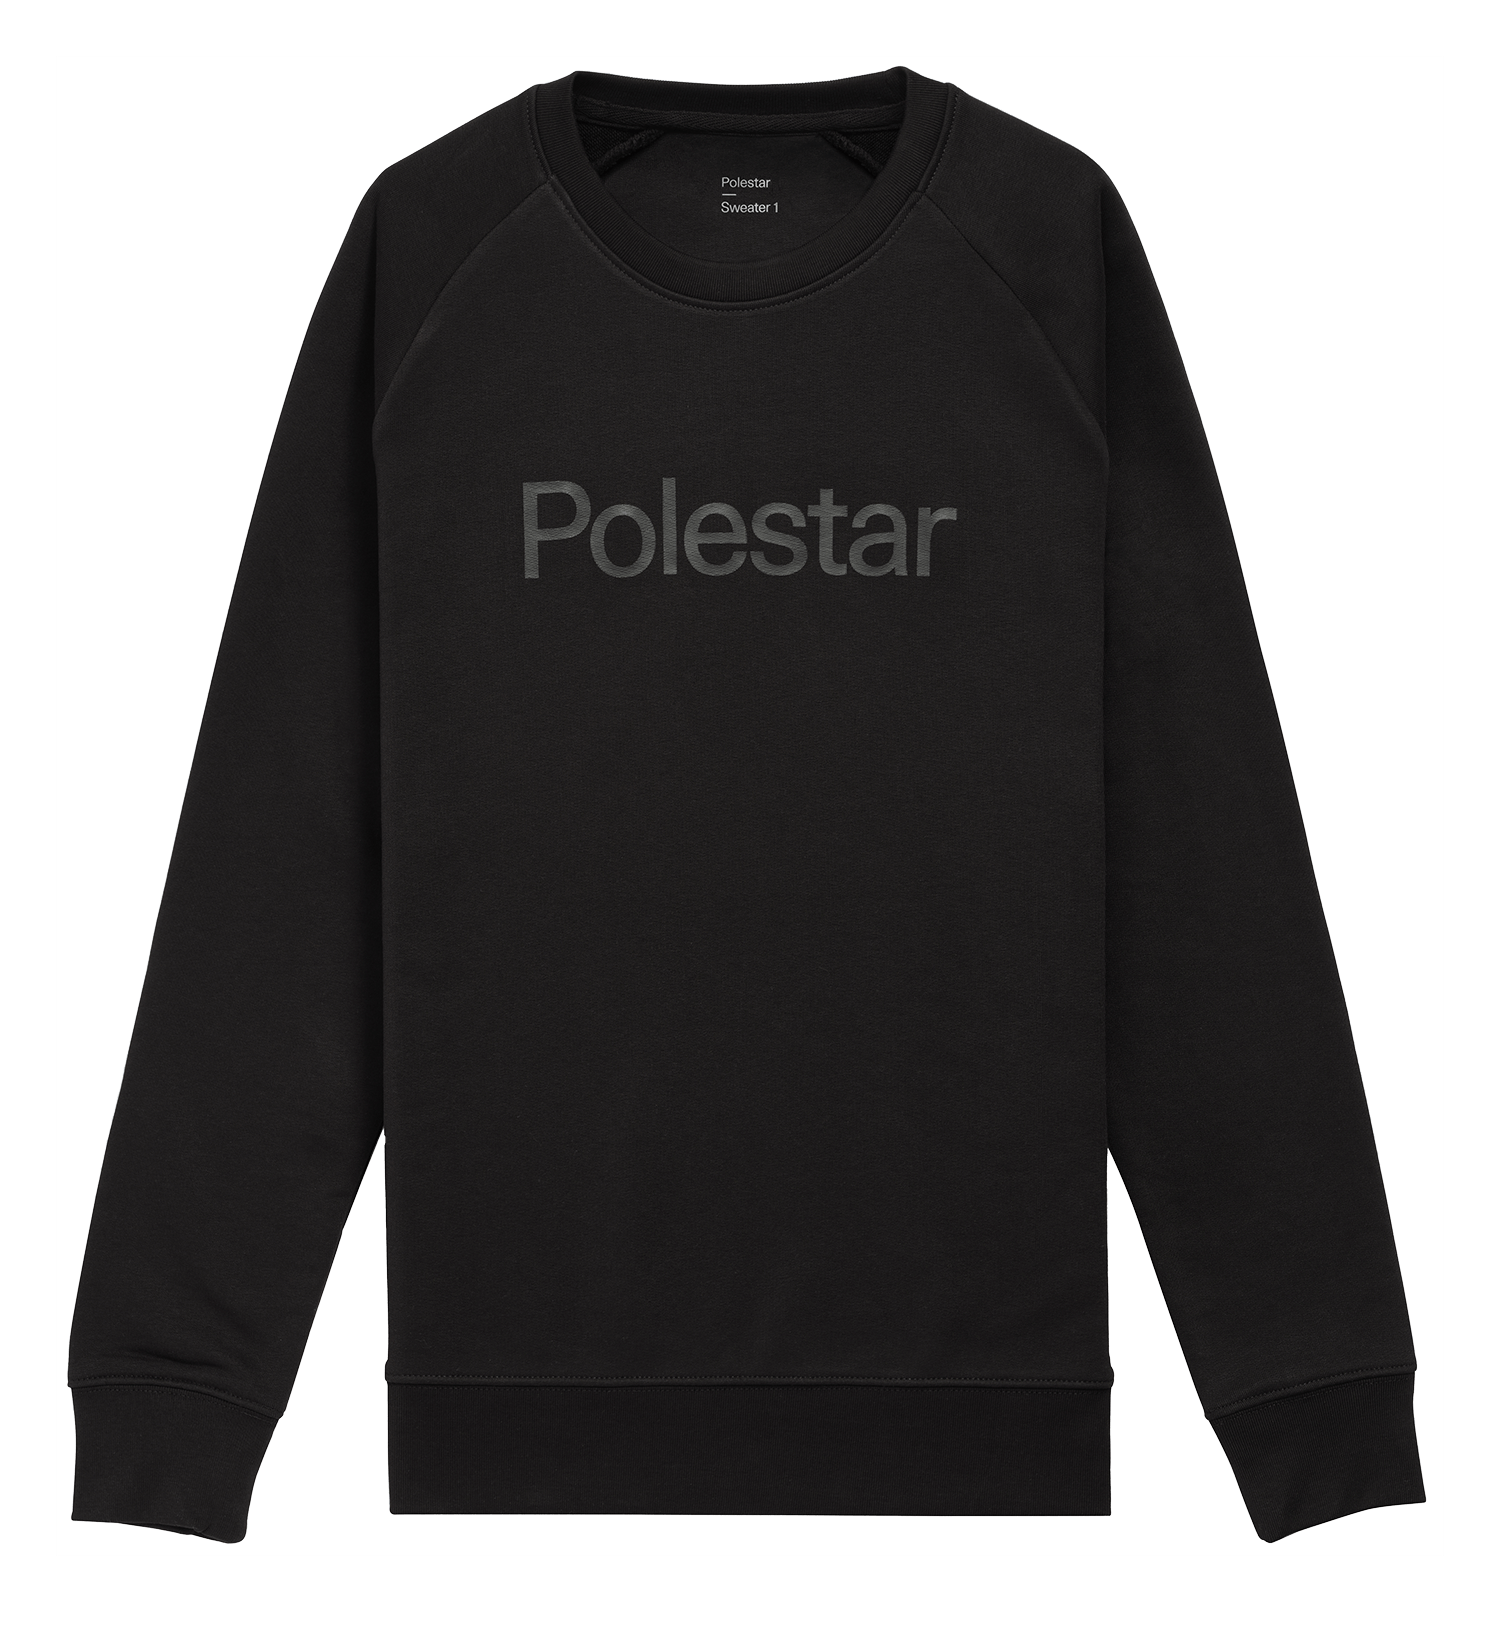 Sweater 1 - Polestar